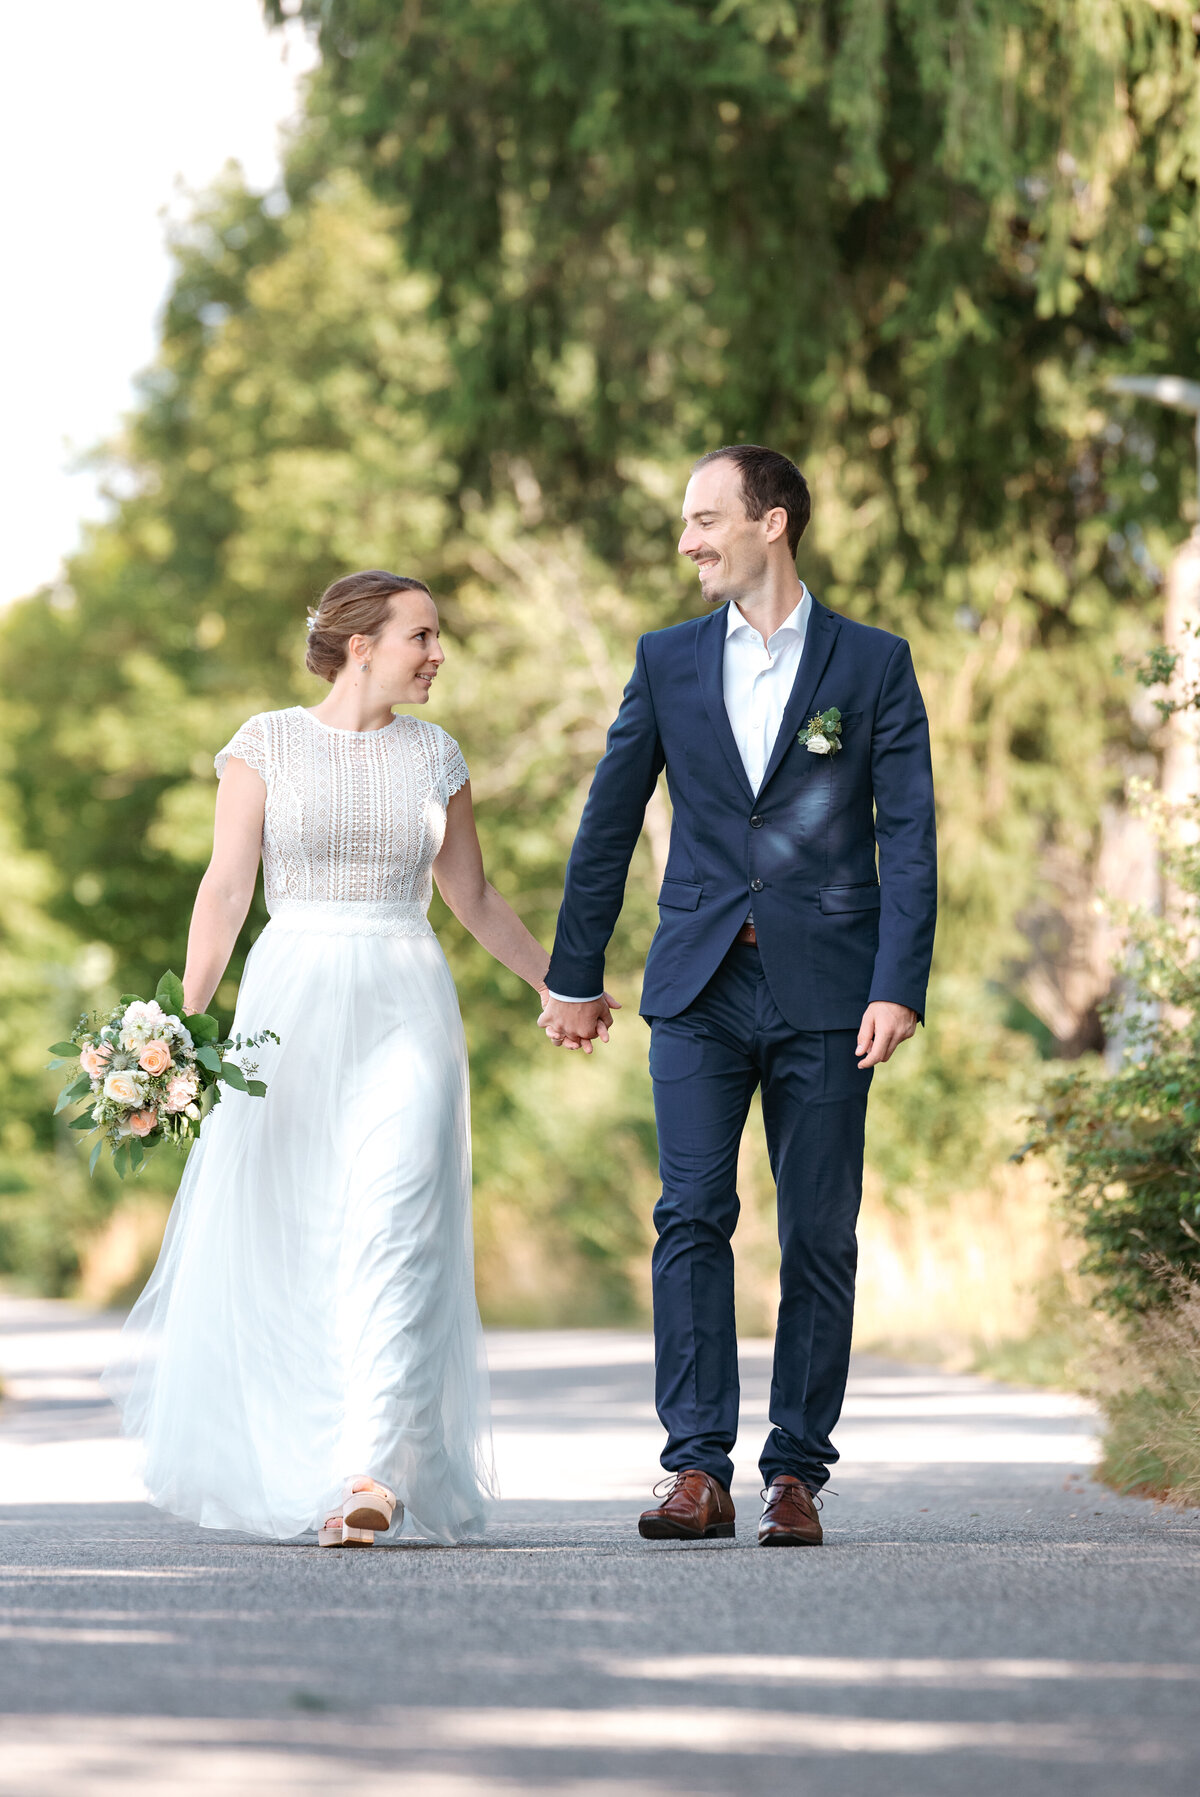 Brautpaar geht händchenhaltend einen Weg entlang hochzeitsfotograf Starnberg